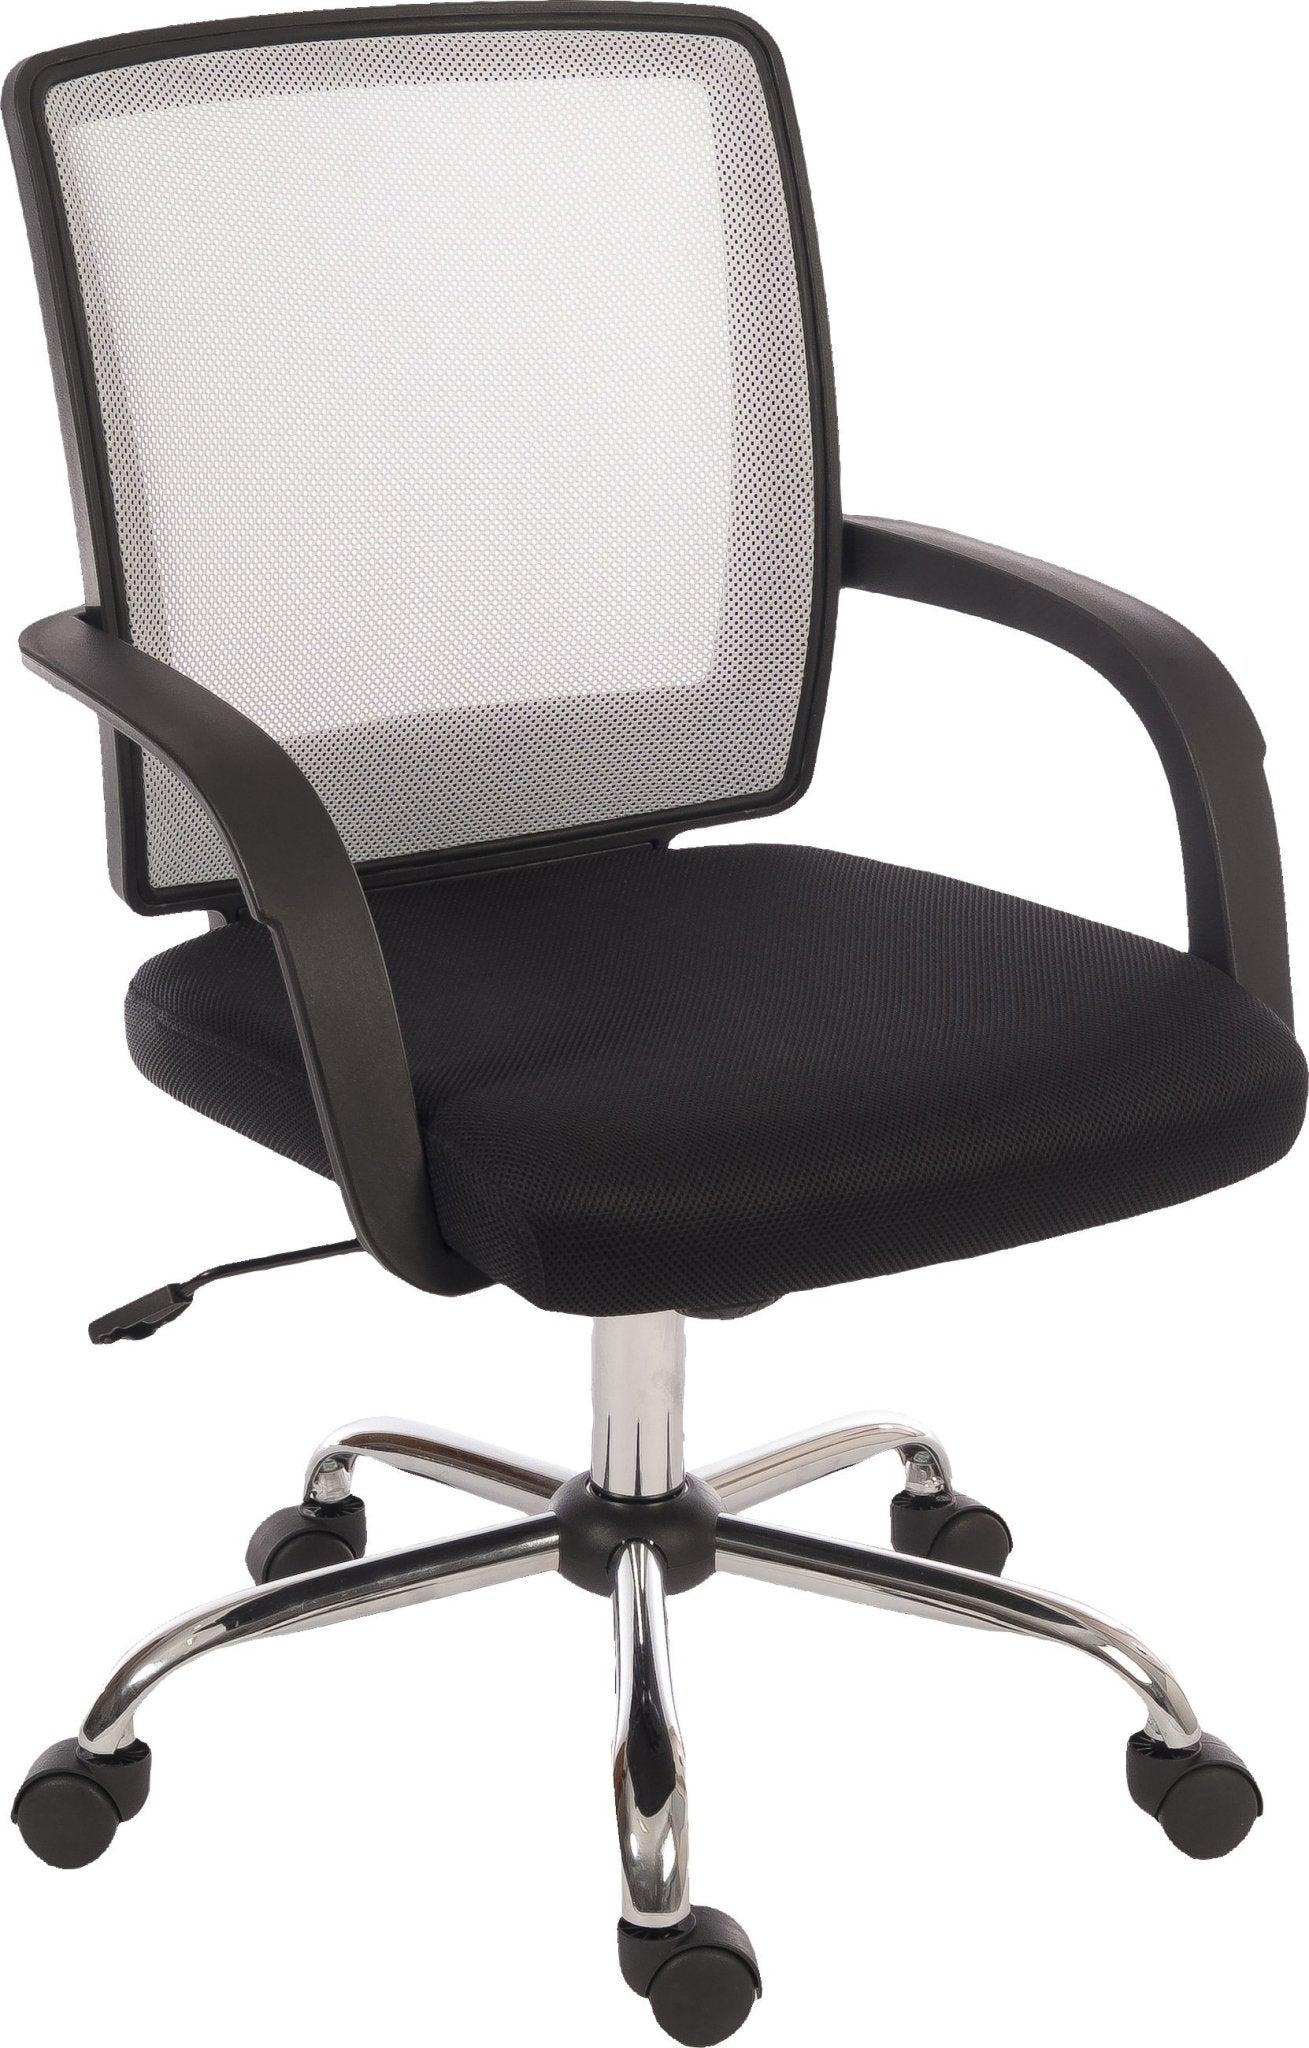 Star mesh office chair (white) - crimblefest furniture - image 1